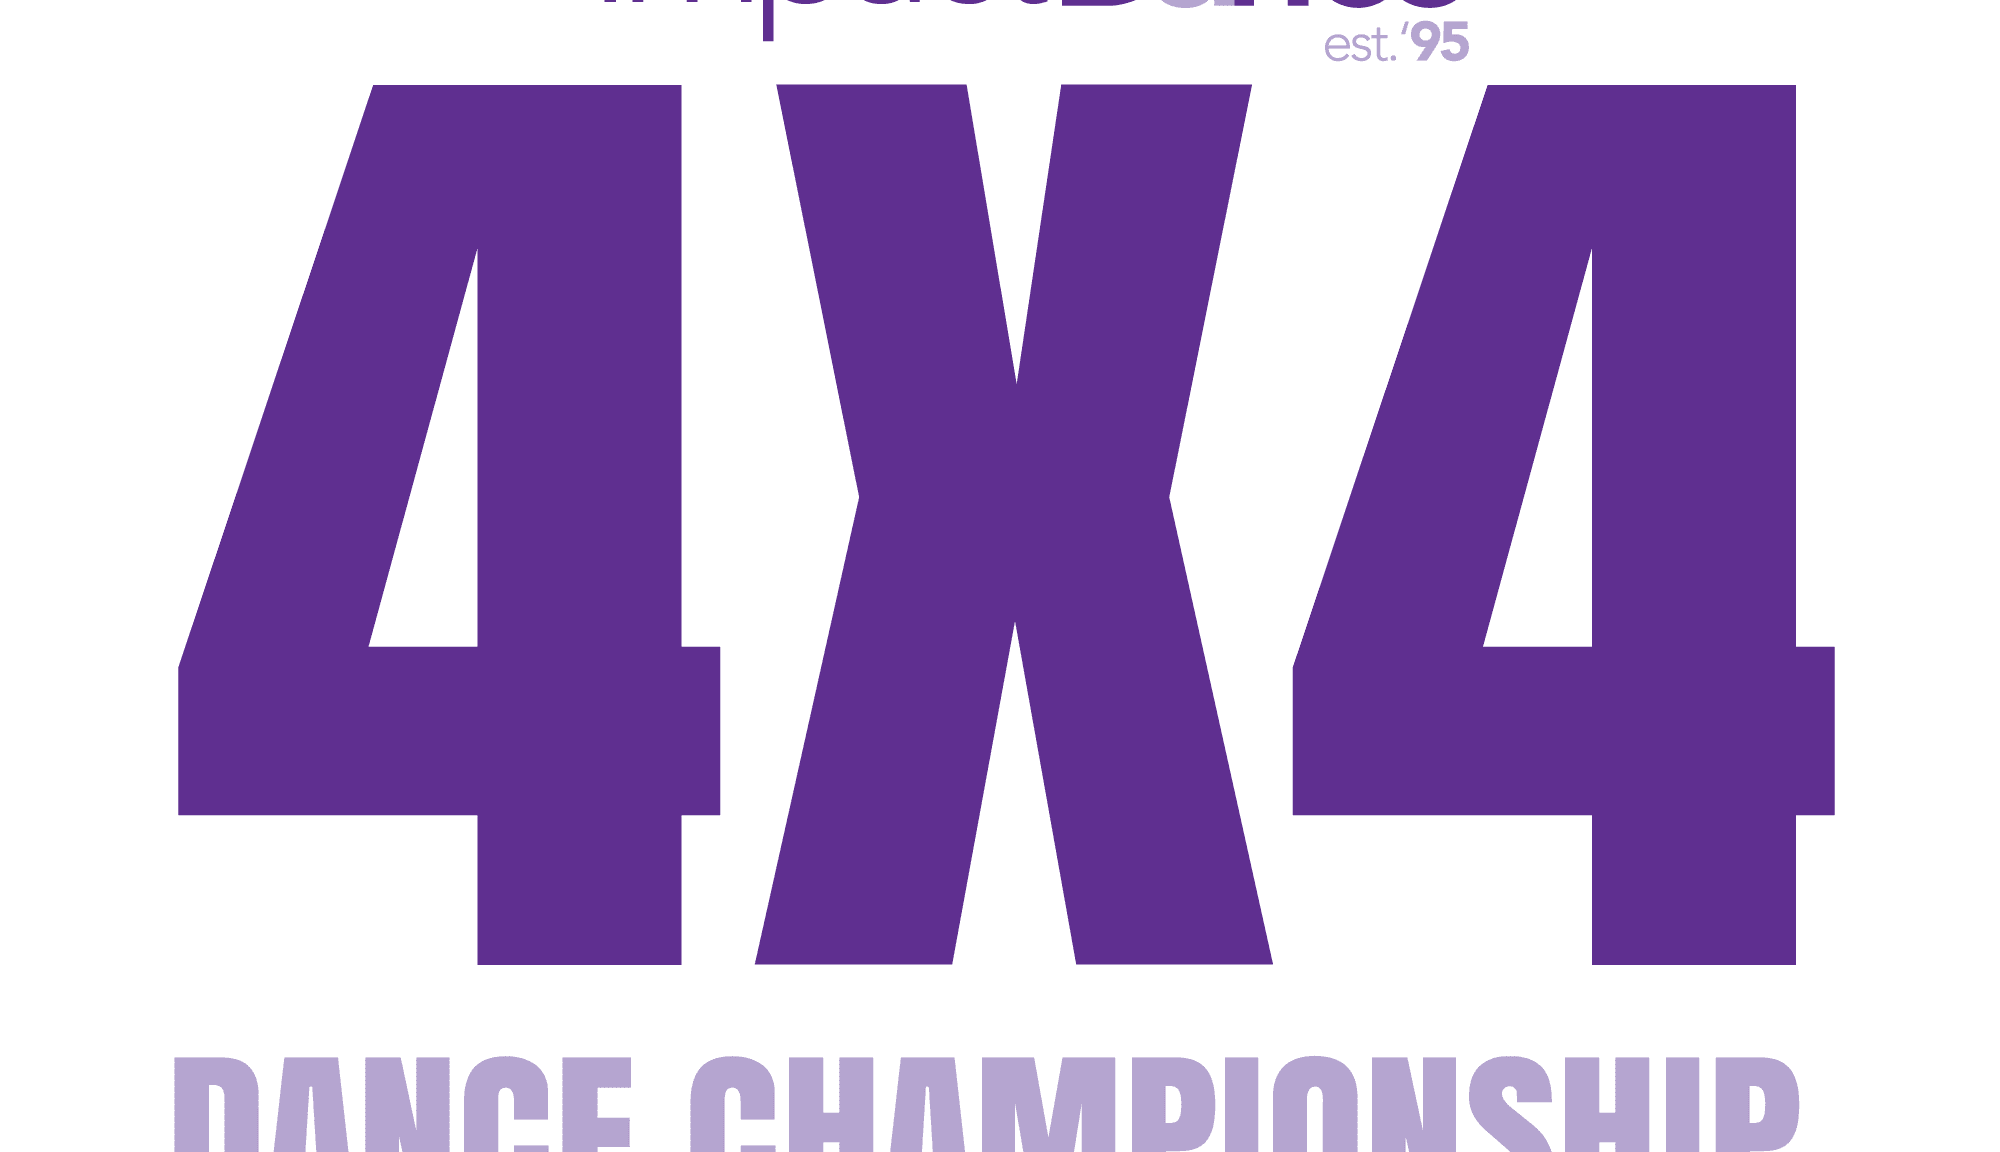 Impact 4x4 dance championship